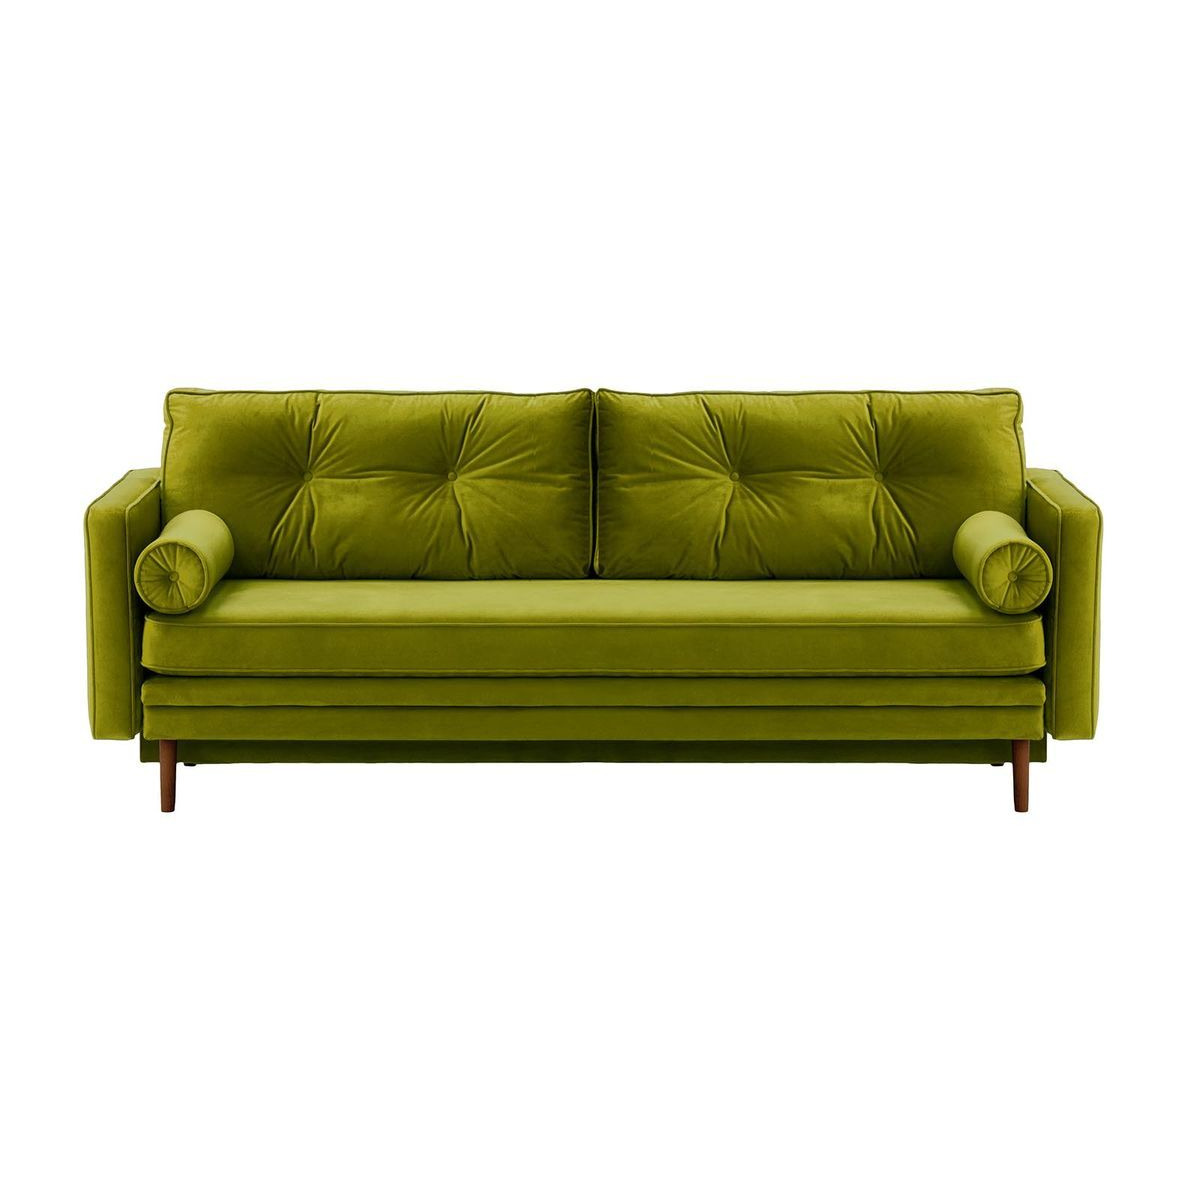 Mossa Sofa Bed with Storage, olive green, Leg colour: dark oak - image 1